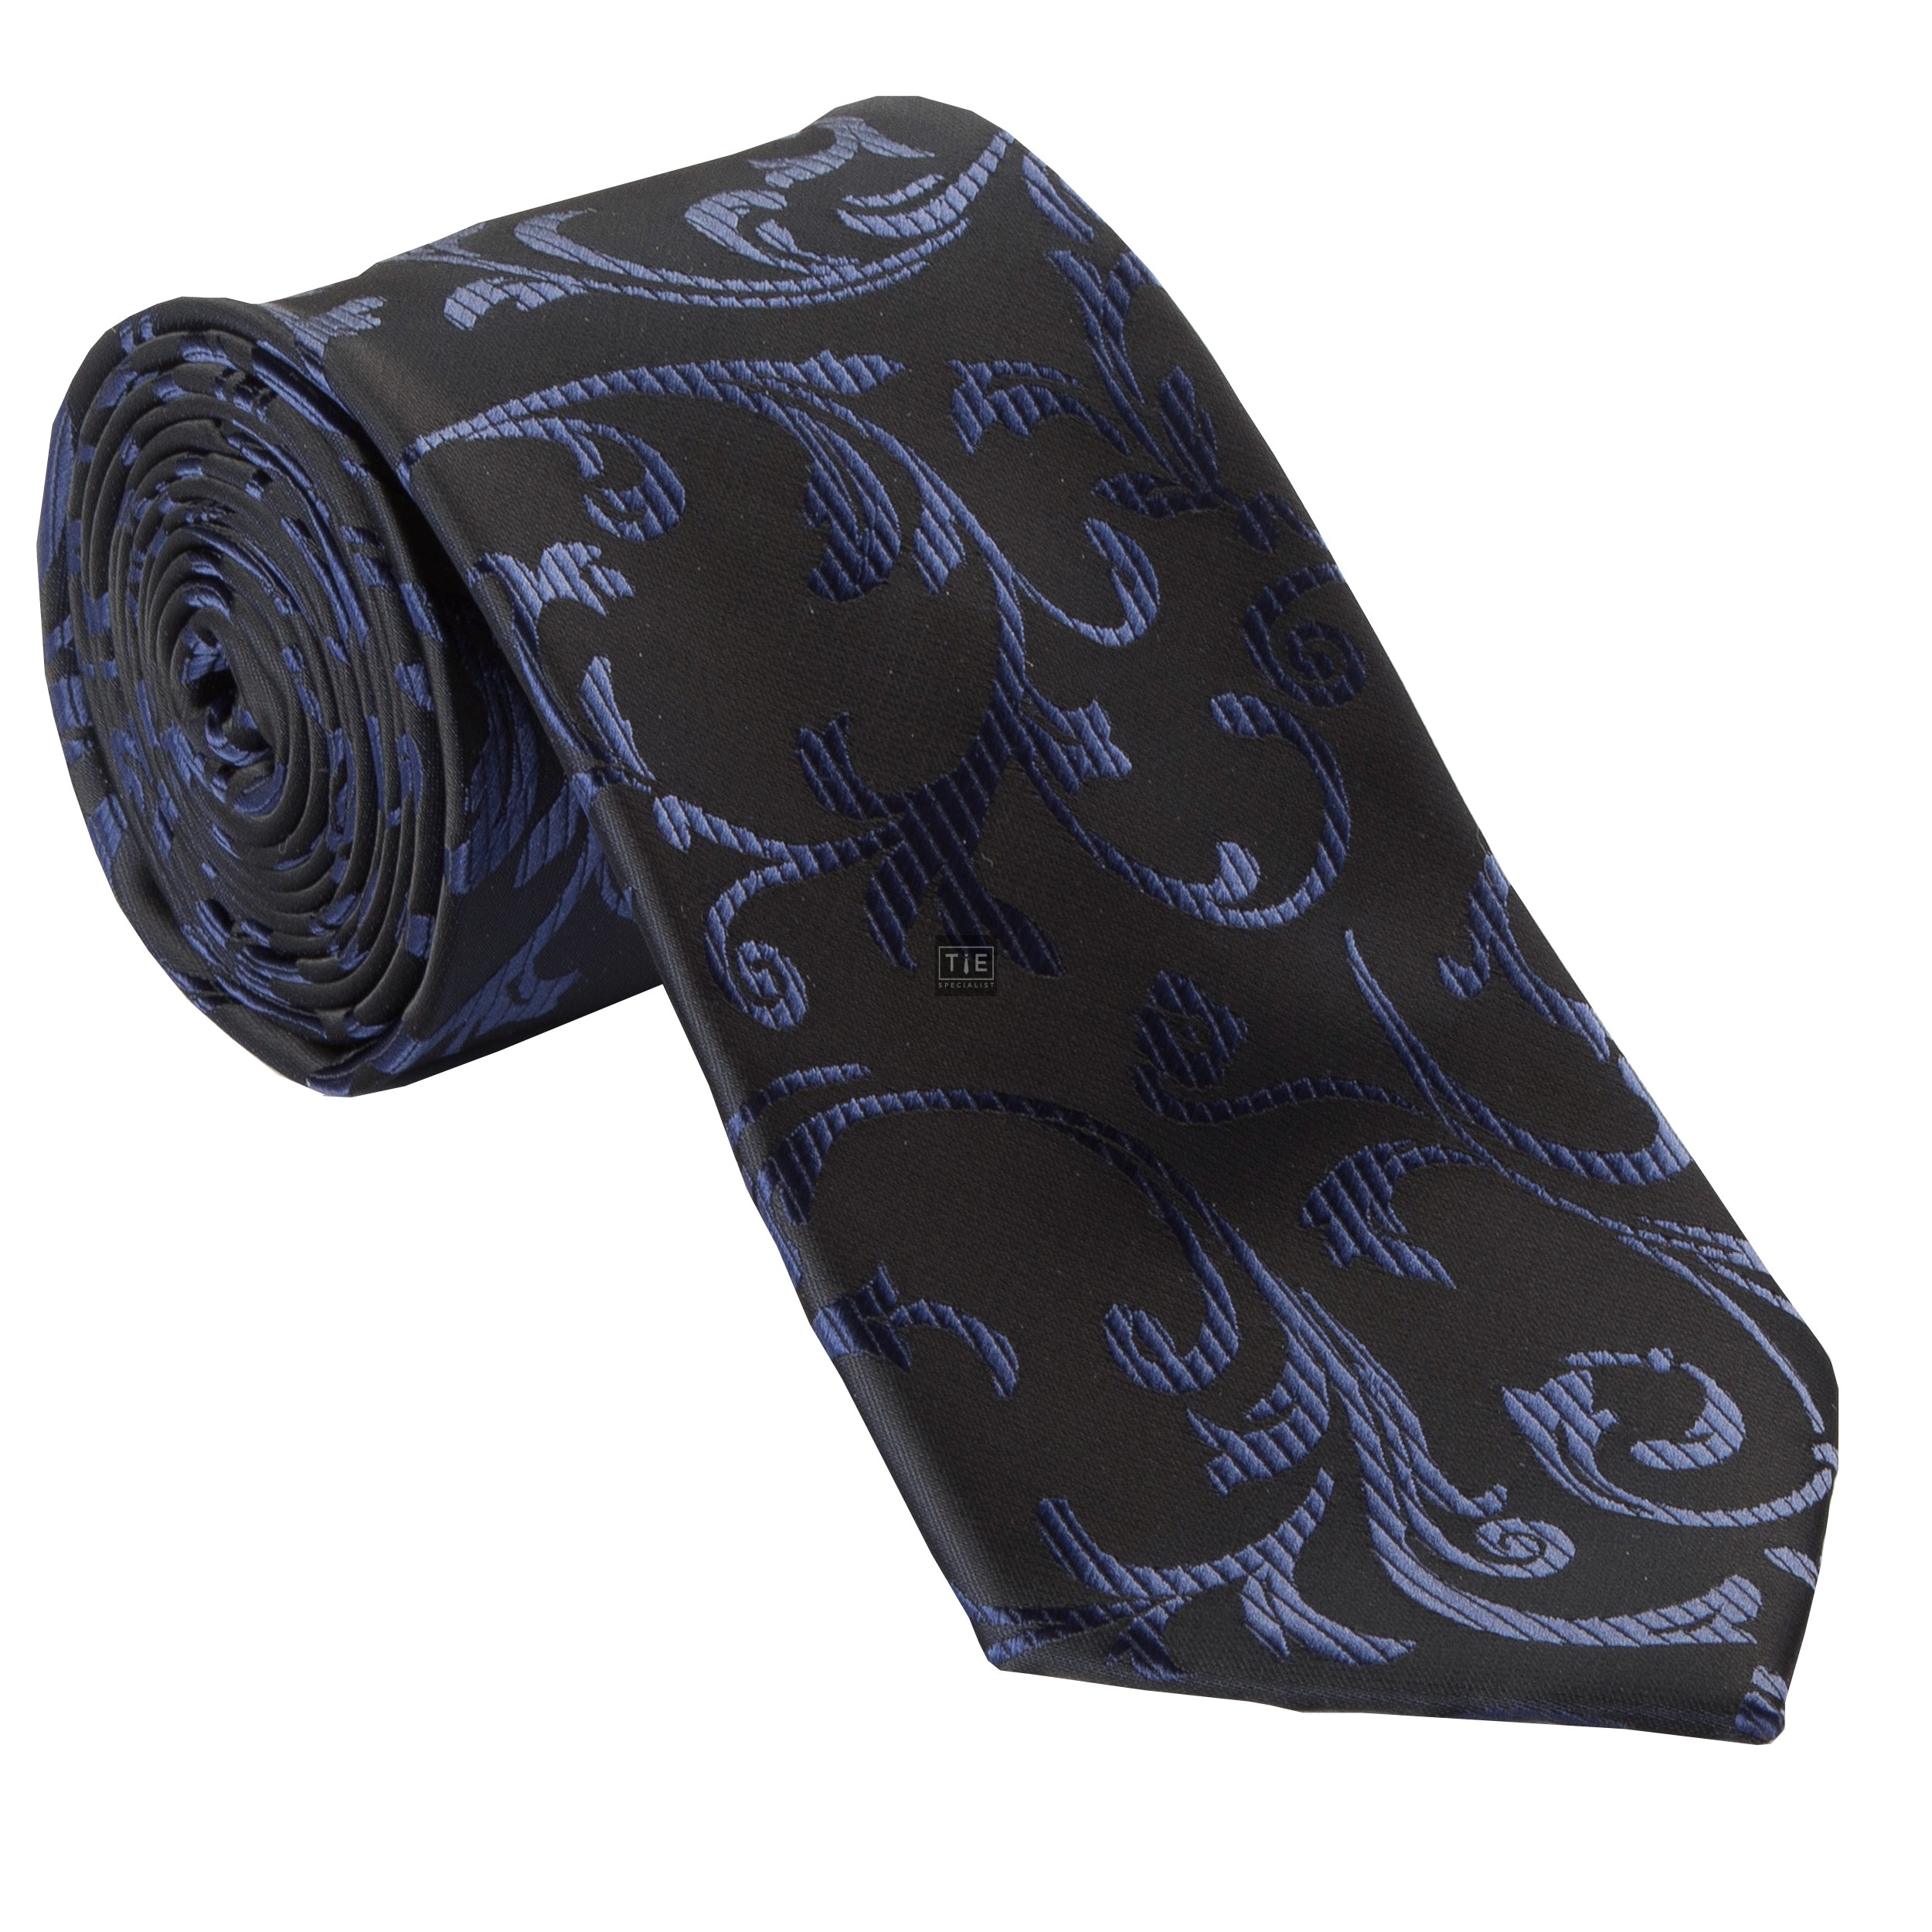 Navy on Black Swirl Leaf Wedding Tie - Patterned Black Classic Width 8cm